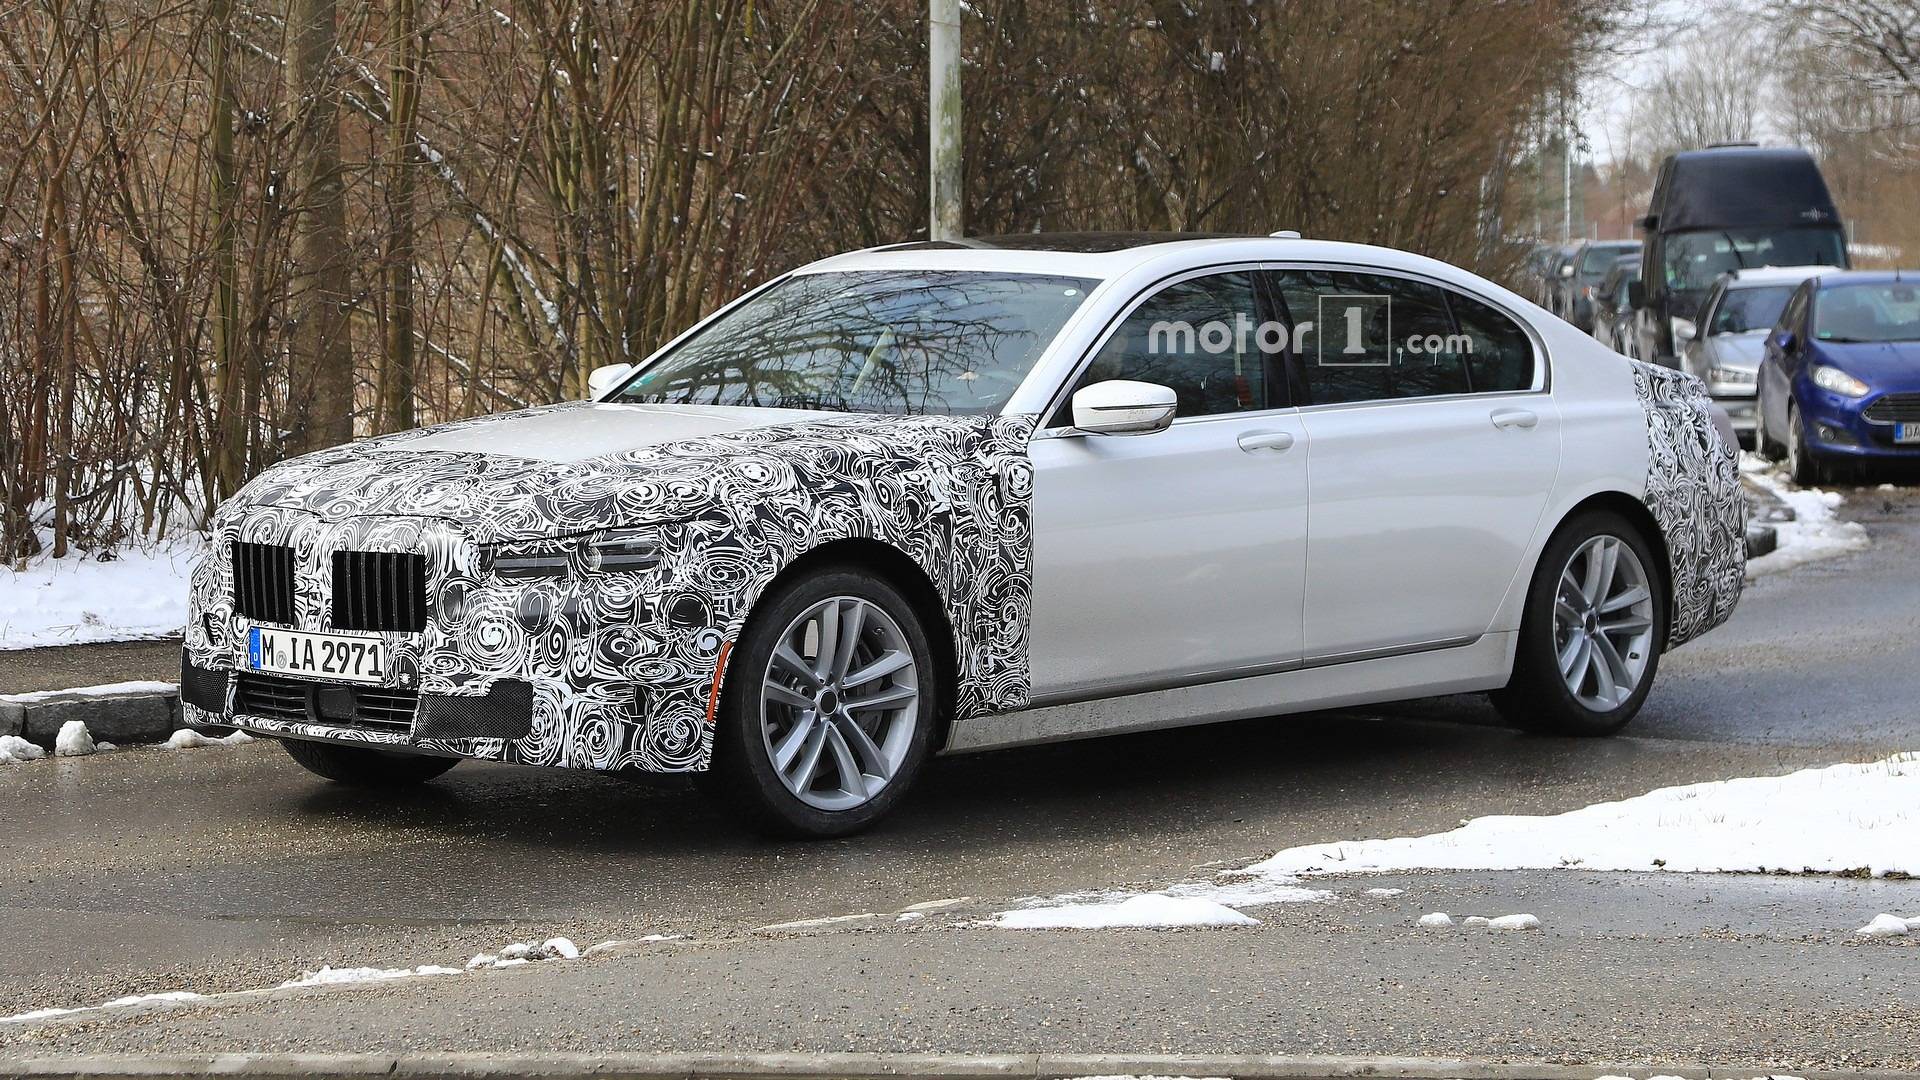 BMW 7 Series Facelift Spied Hiding Bigger Front Grille [UPDATE]